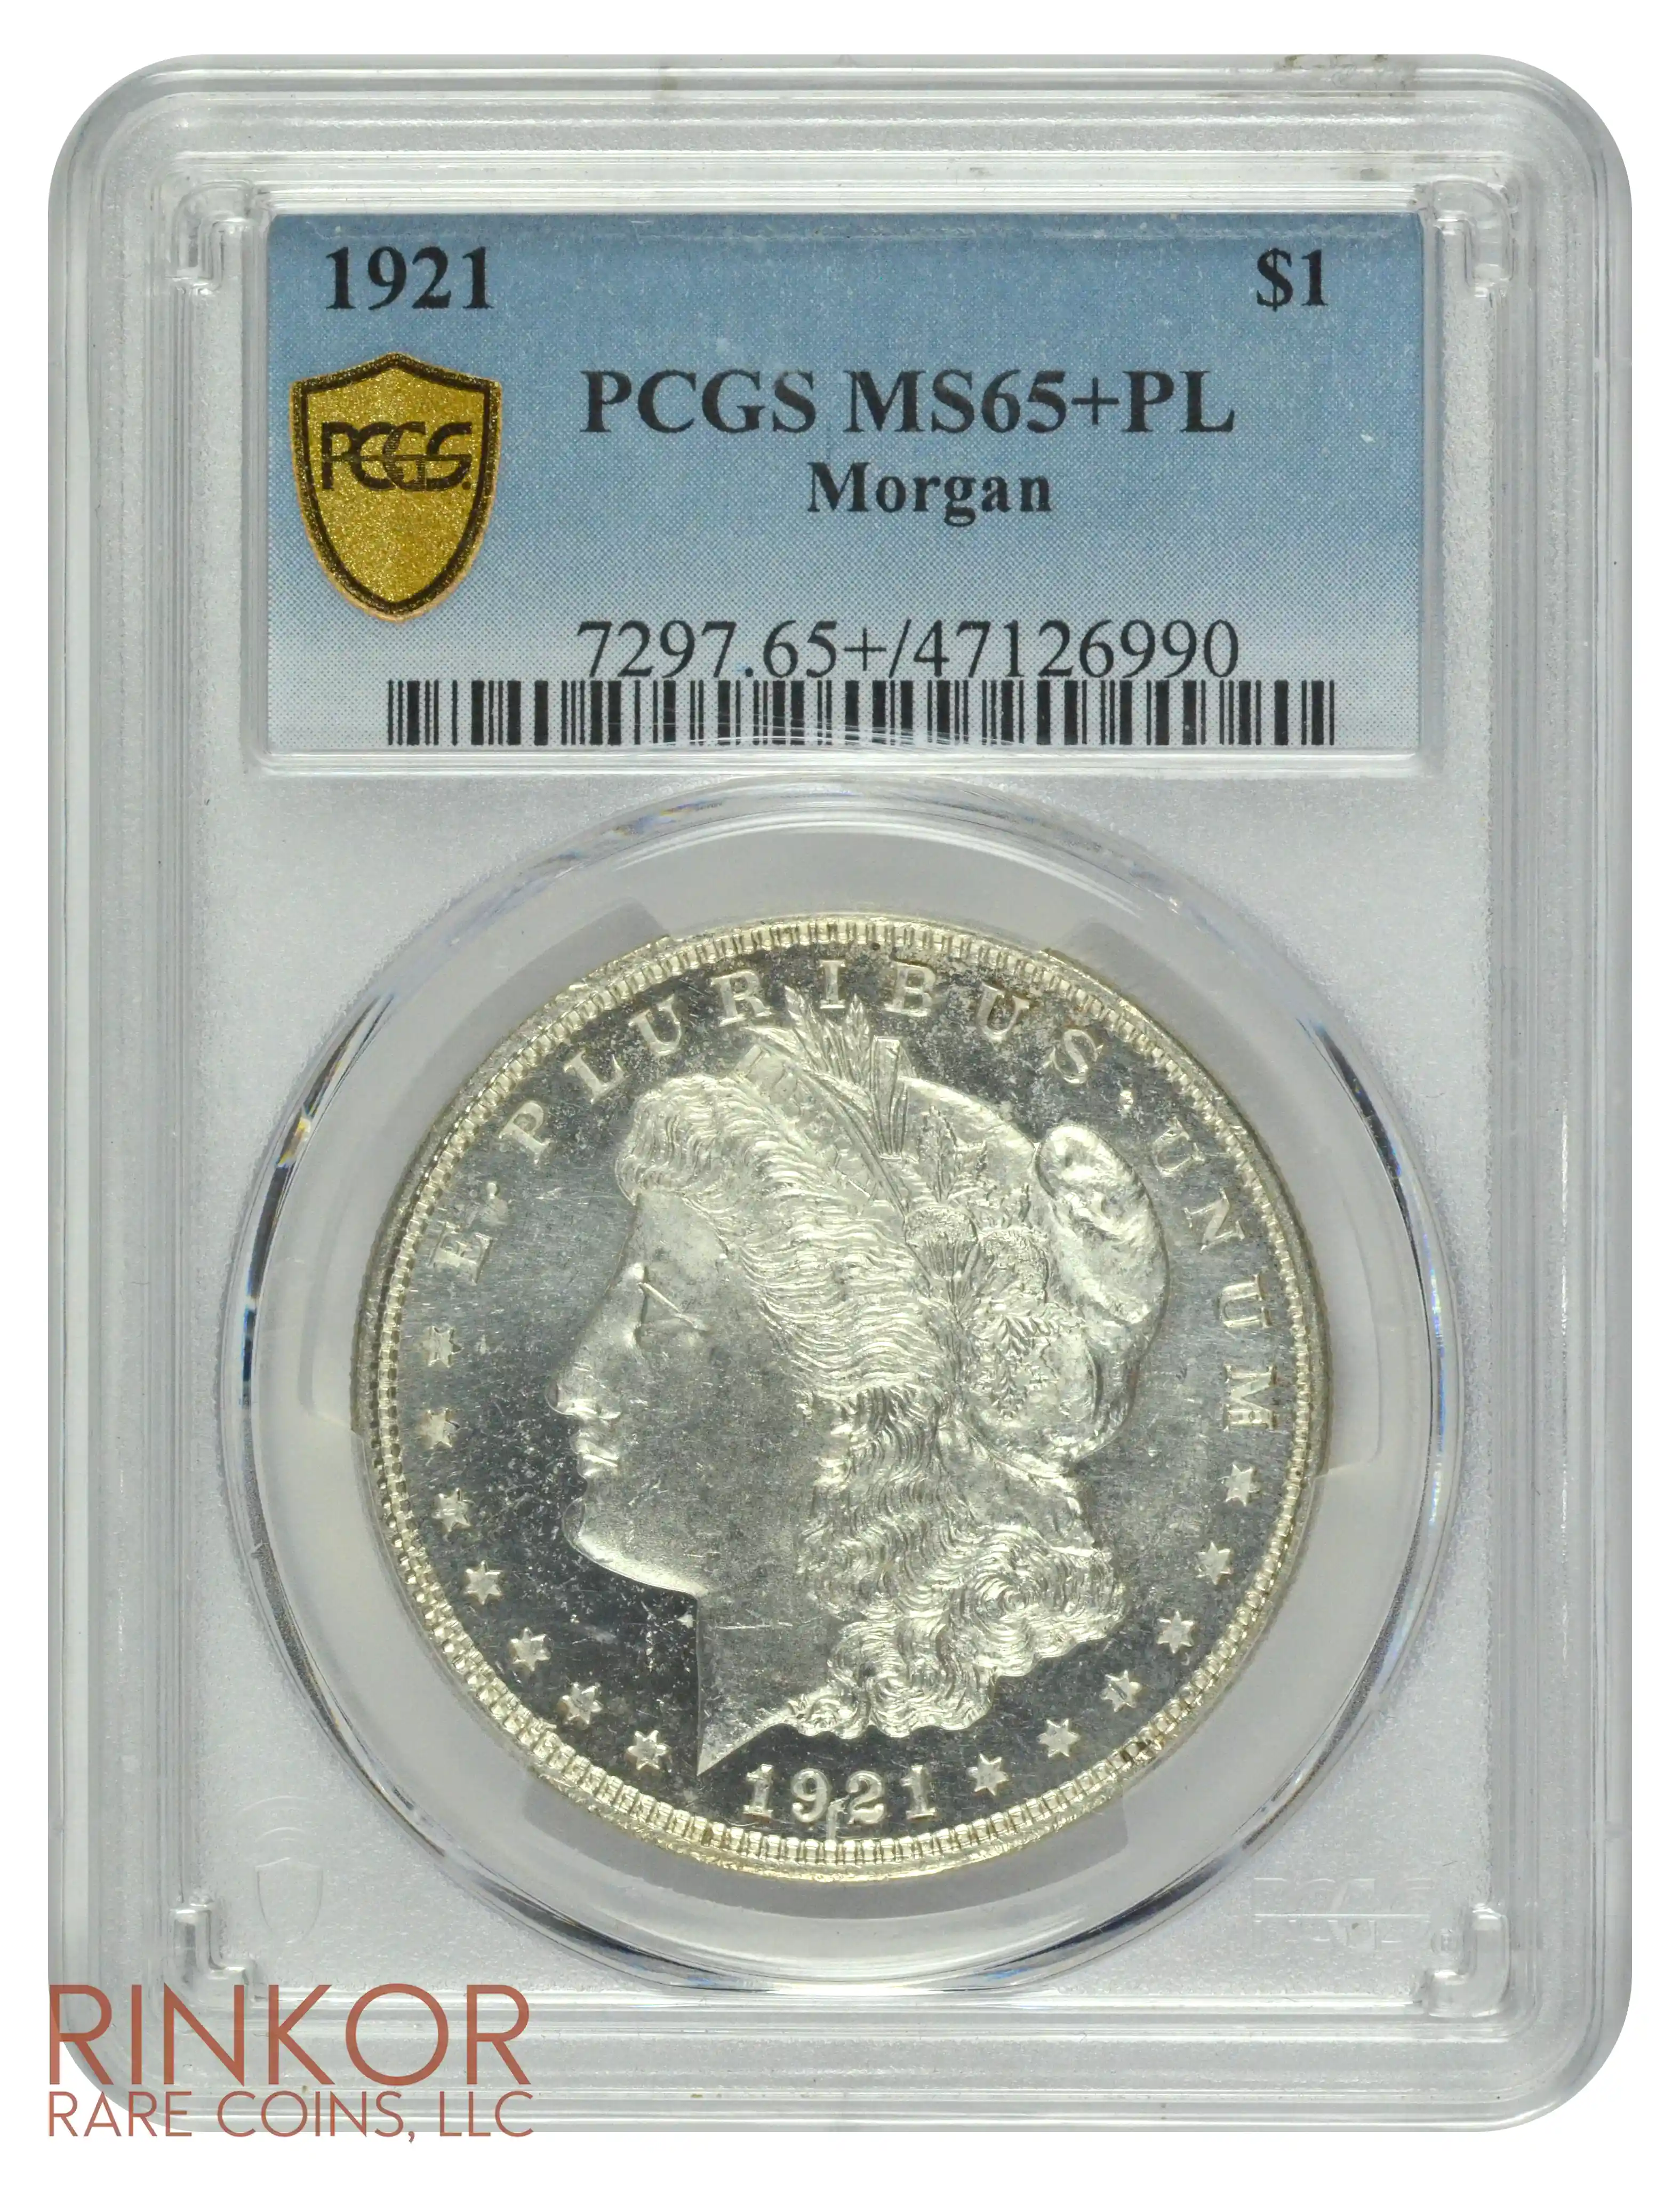 1921 $1 Morgan PCGS MS 65+ PL